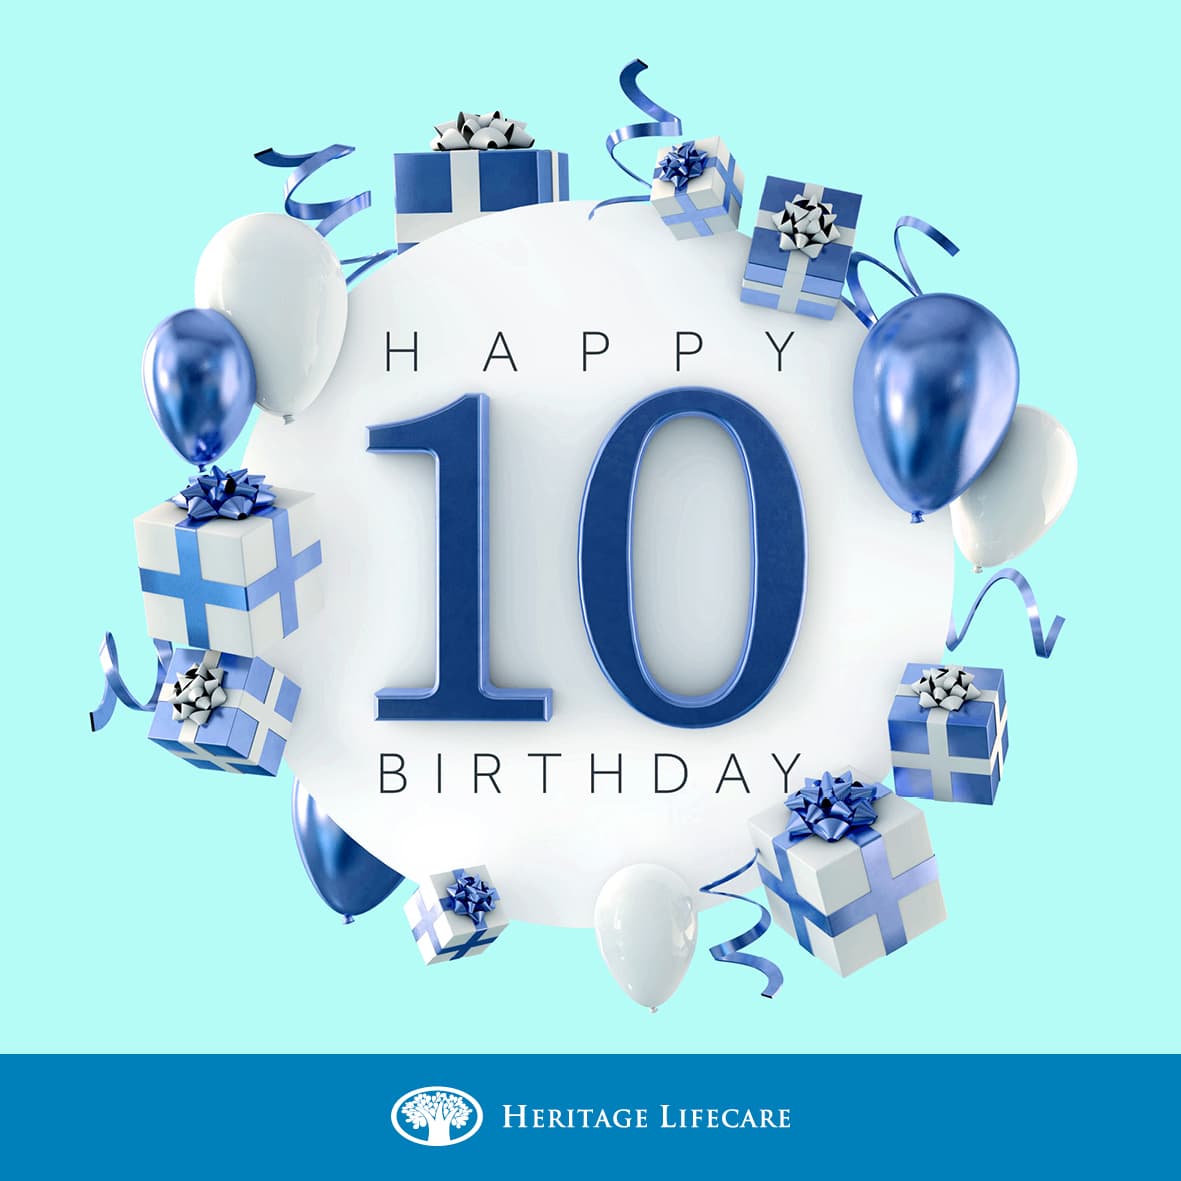 Heritage Lifecare's 10th Birthday